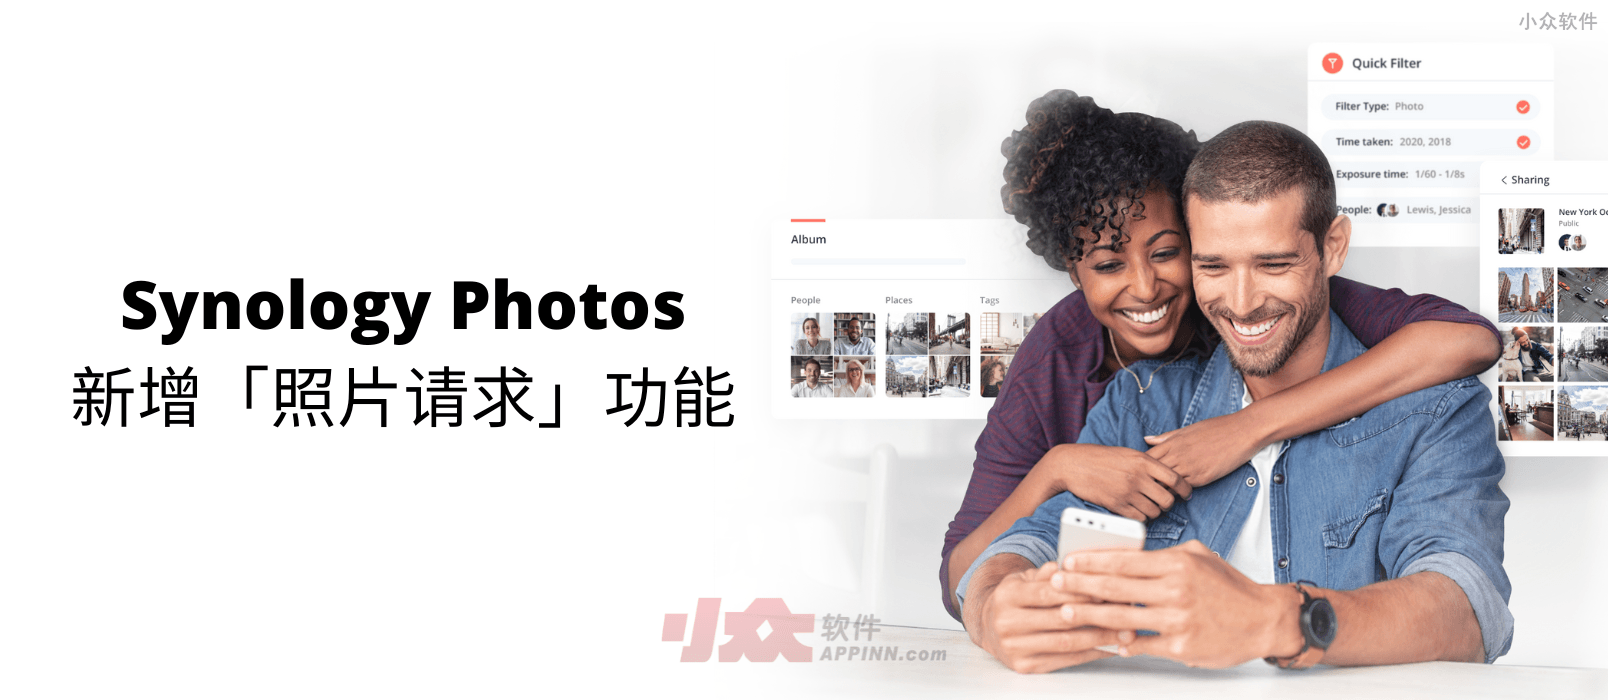 Synology Photos 套件更新，支持创建照片请求链接，向其他用户及访客搜集照片